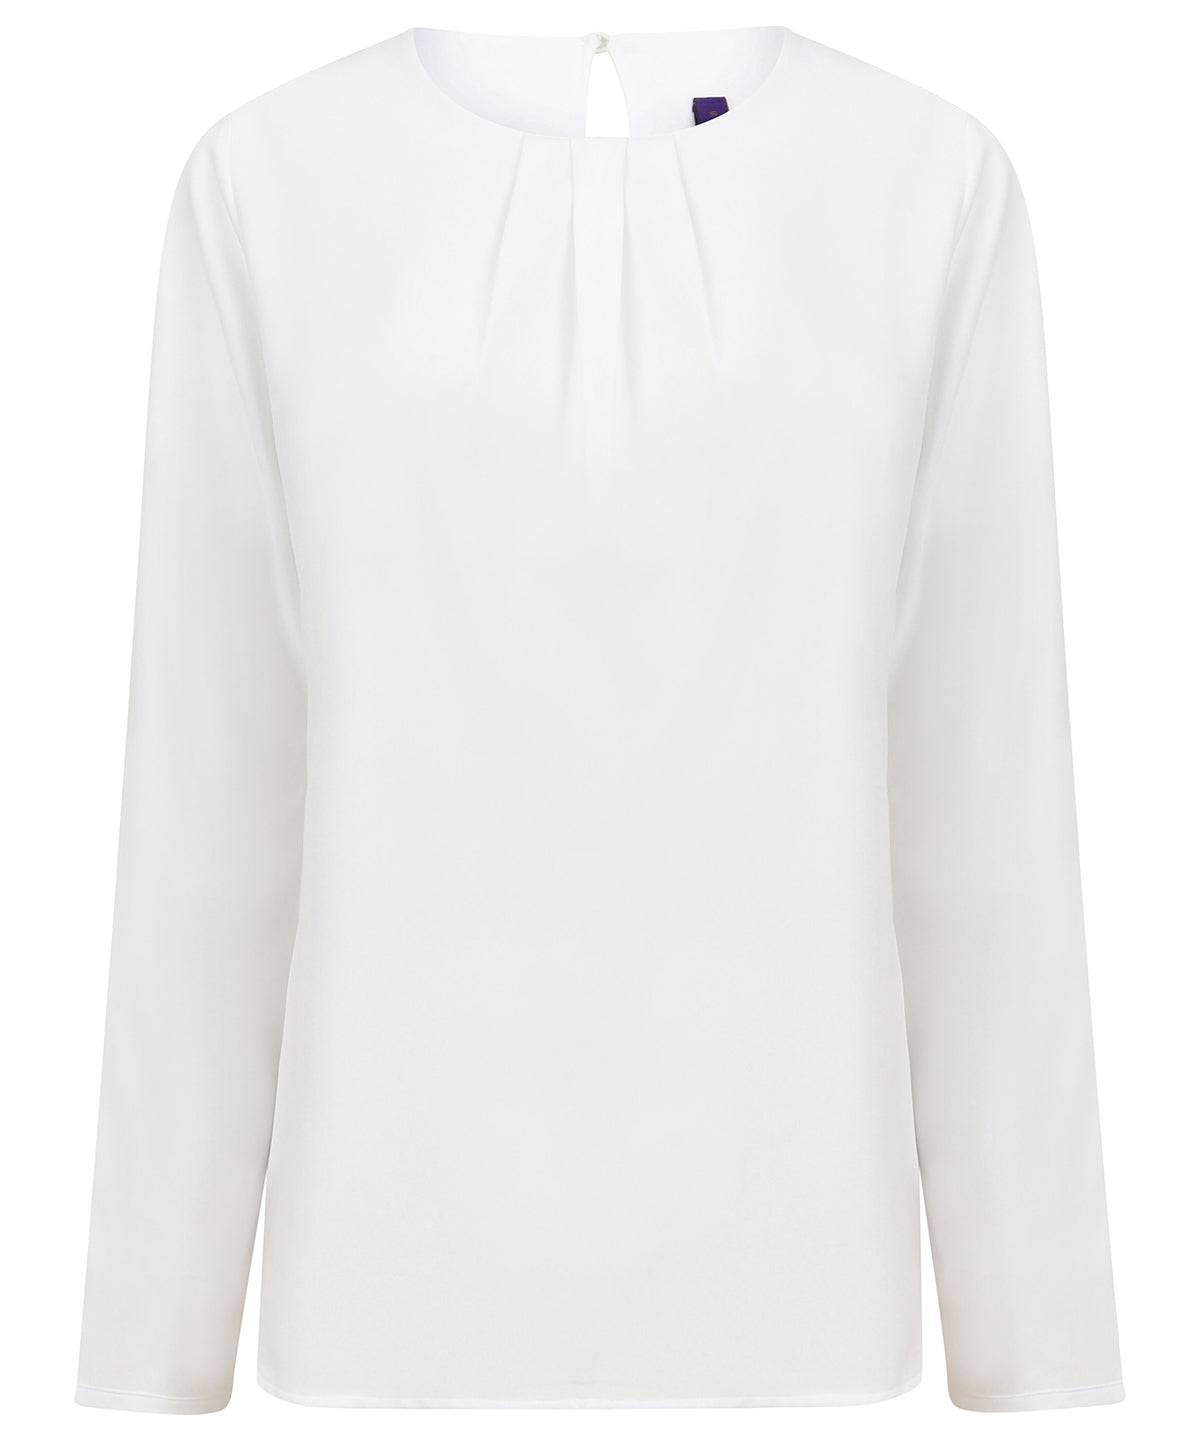 White - Women's pleat front long sleeve blouse